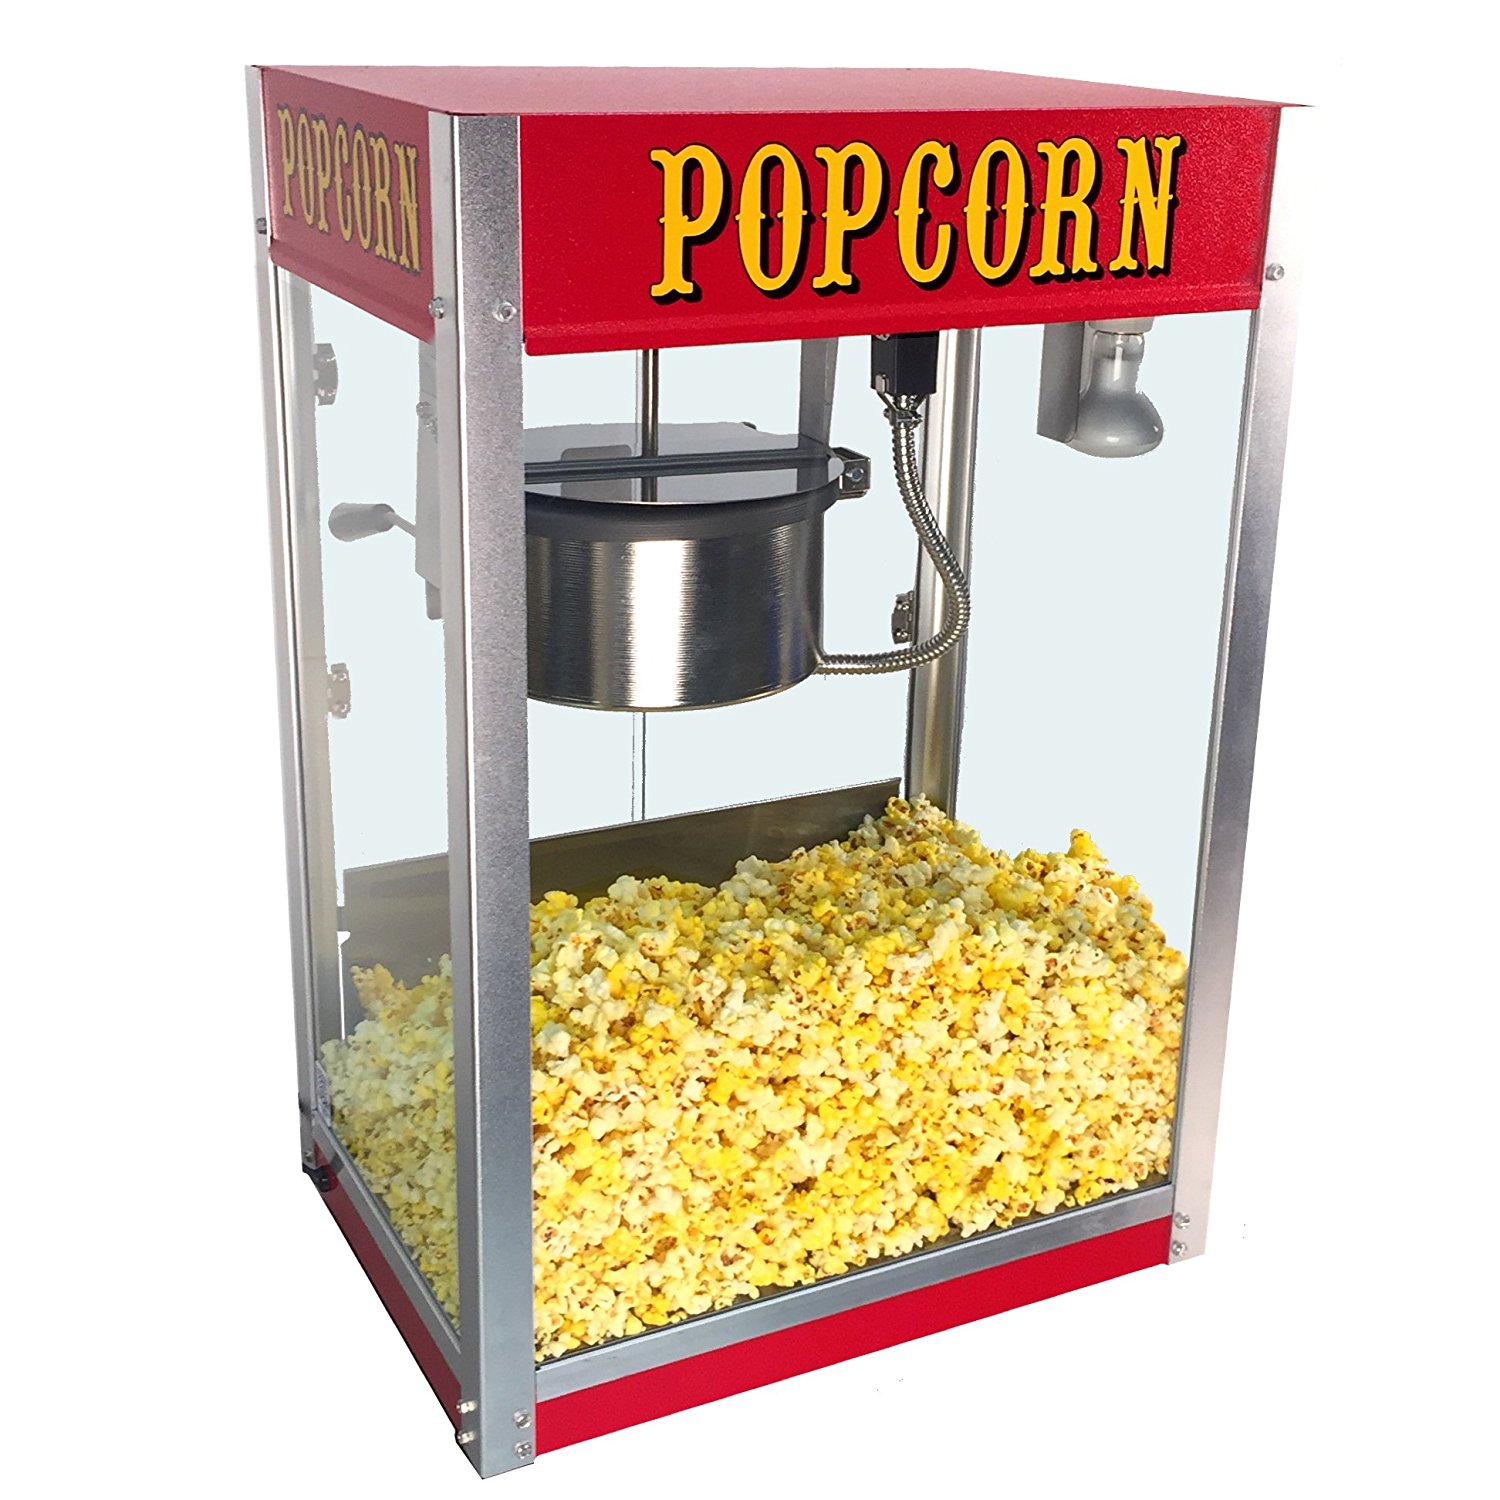 Amazon.com: Paragon Theater Pop 8 Ounce Popcorn Machine for ...